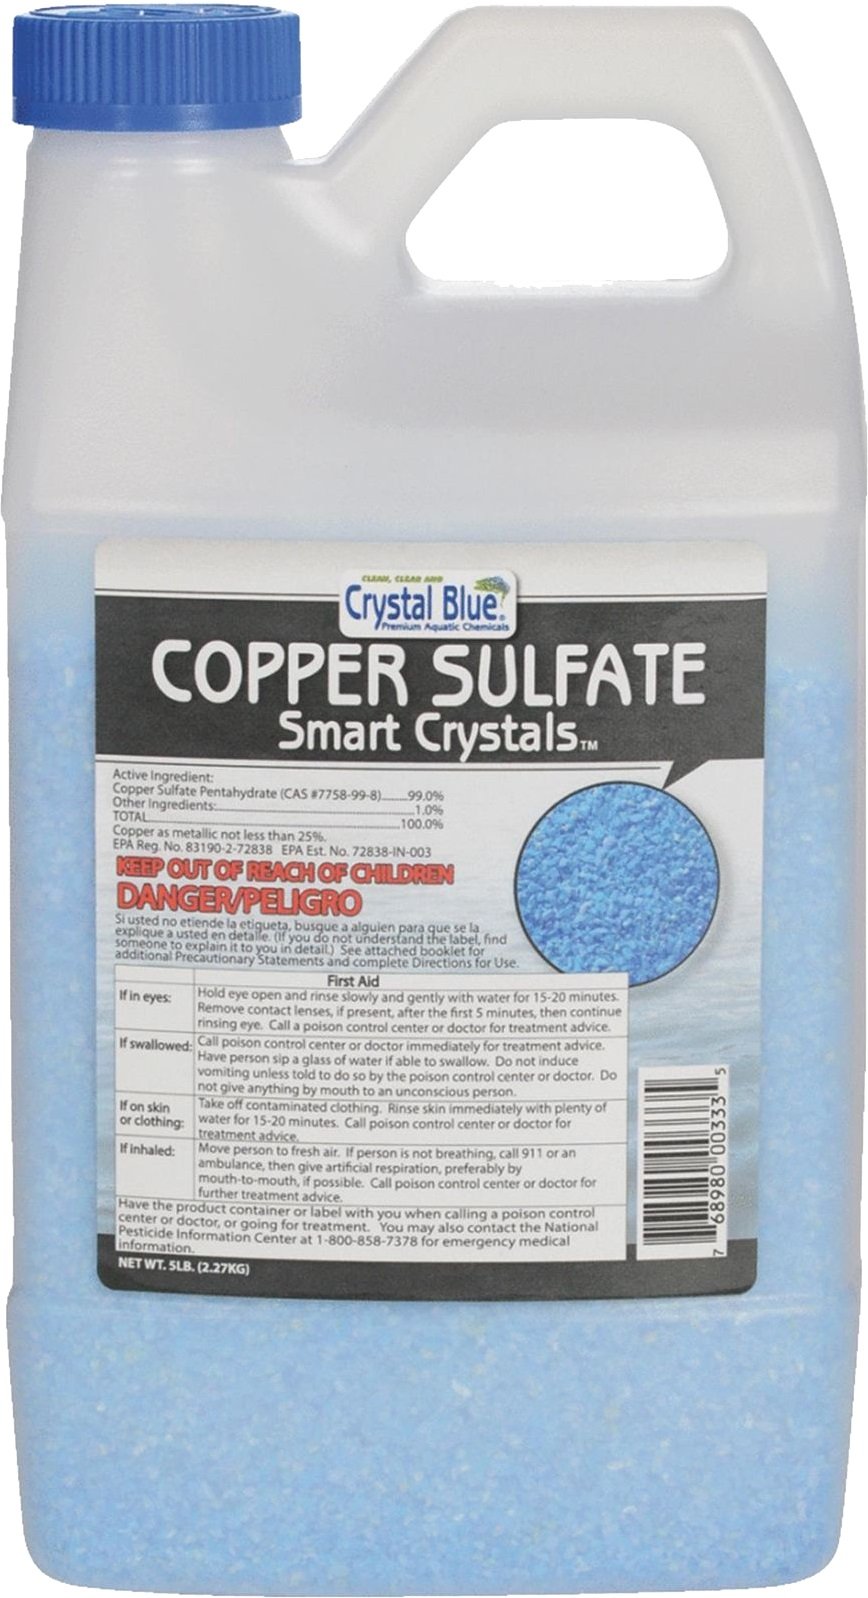 Sanco Industries Crystal Blue Copper Sulfate, 5 lb. Bag - 00333